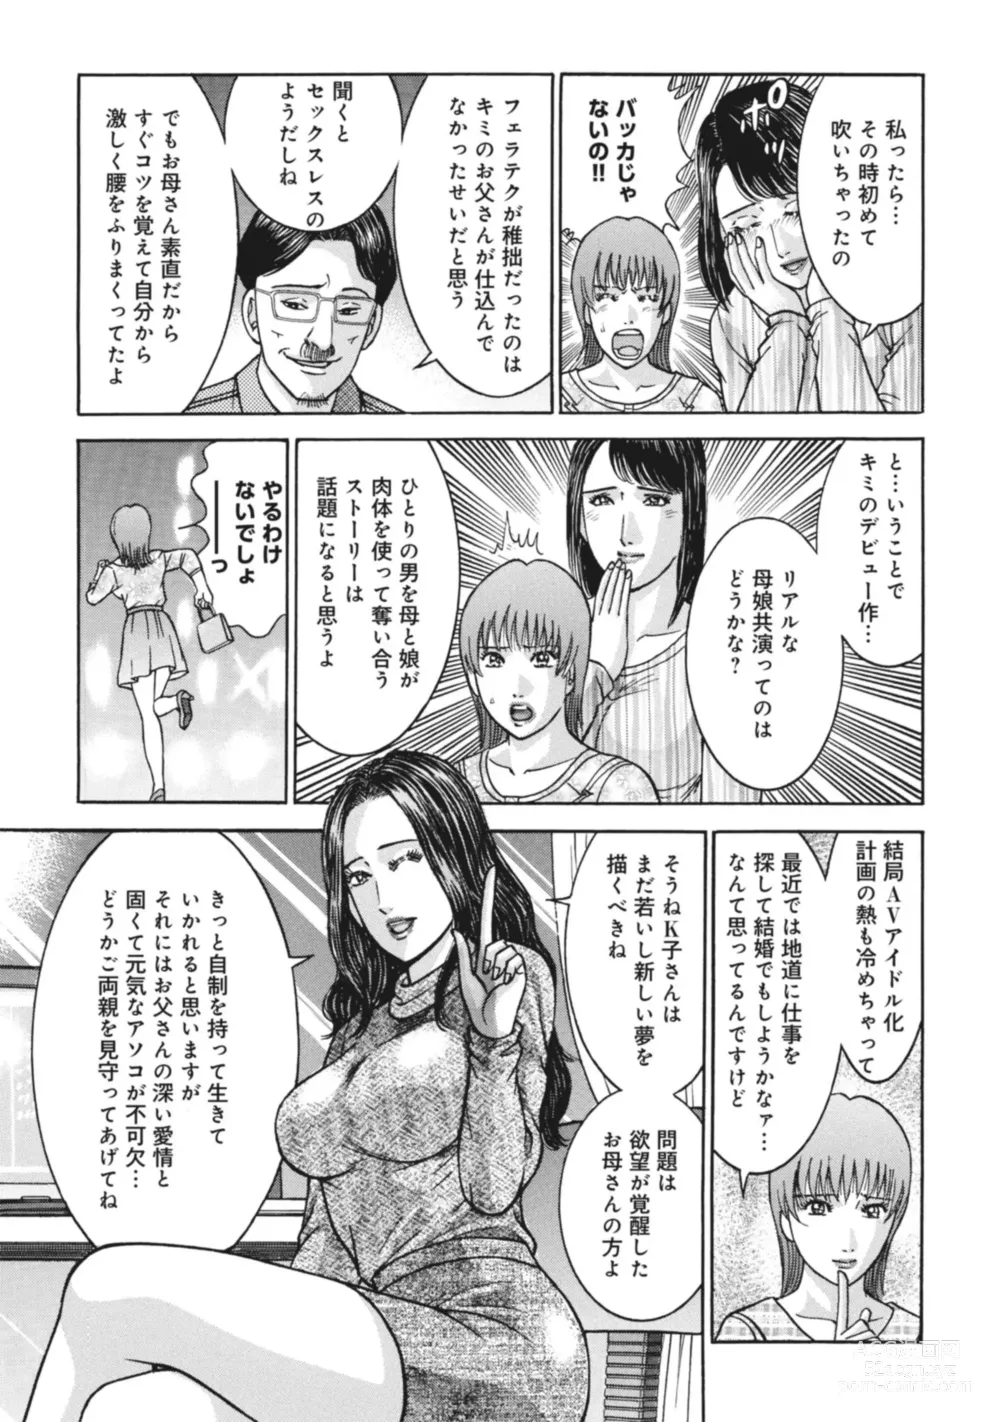 Page 20 of manga Renai Kaunserā Maki no Teisō Fairu 1